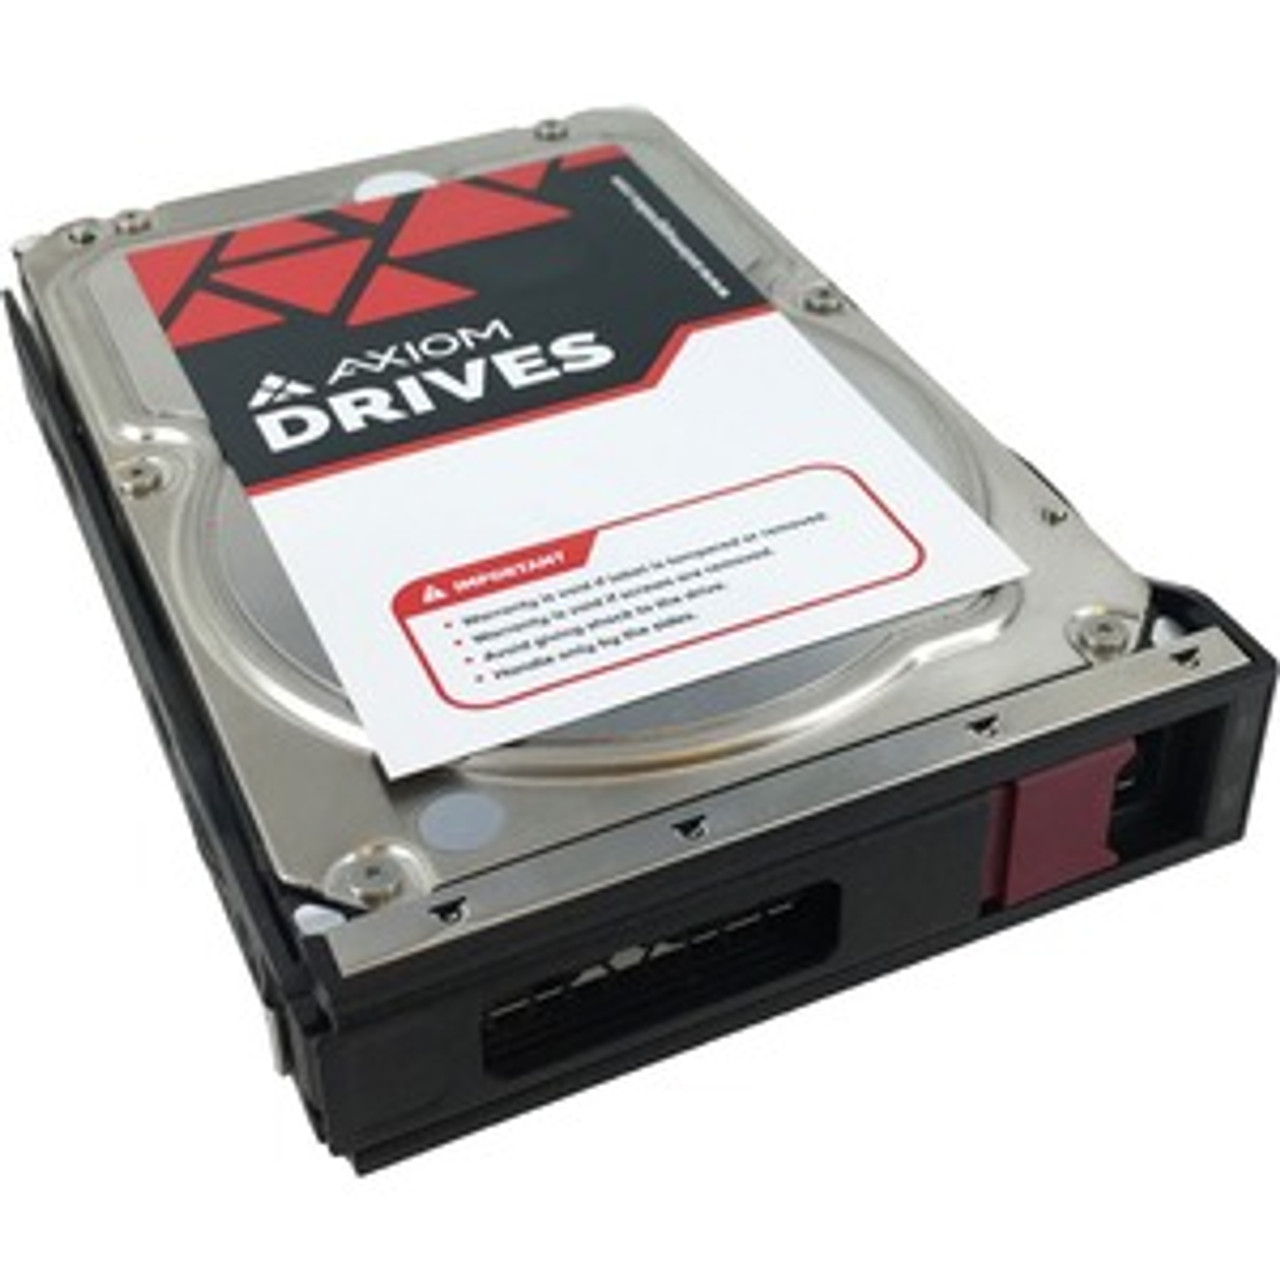 Axiom 6 TB Hard Drive - 3.5" Internal - SAS (12Gb/s SAS) - Server Device Supported - 7200rpm - Hot Swappable - 5 Year  MFR P/N 861746-B21-AX